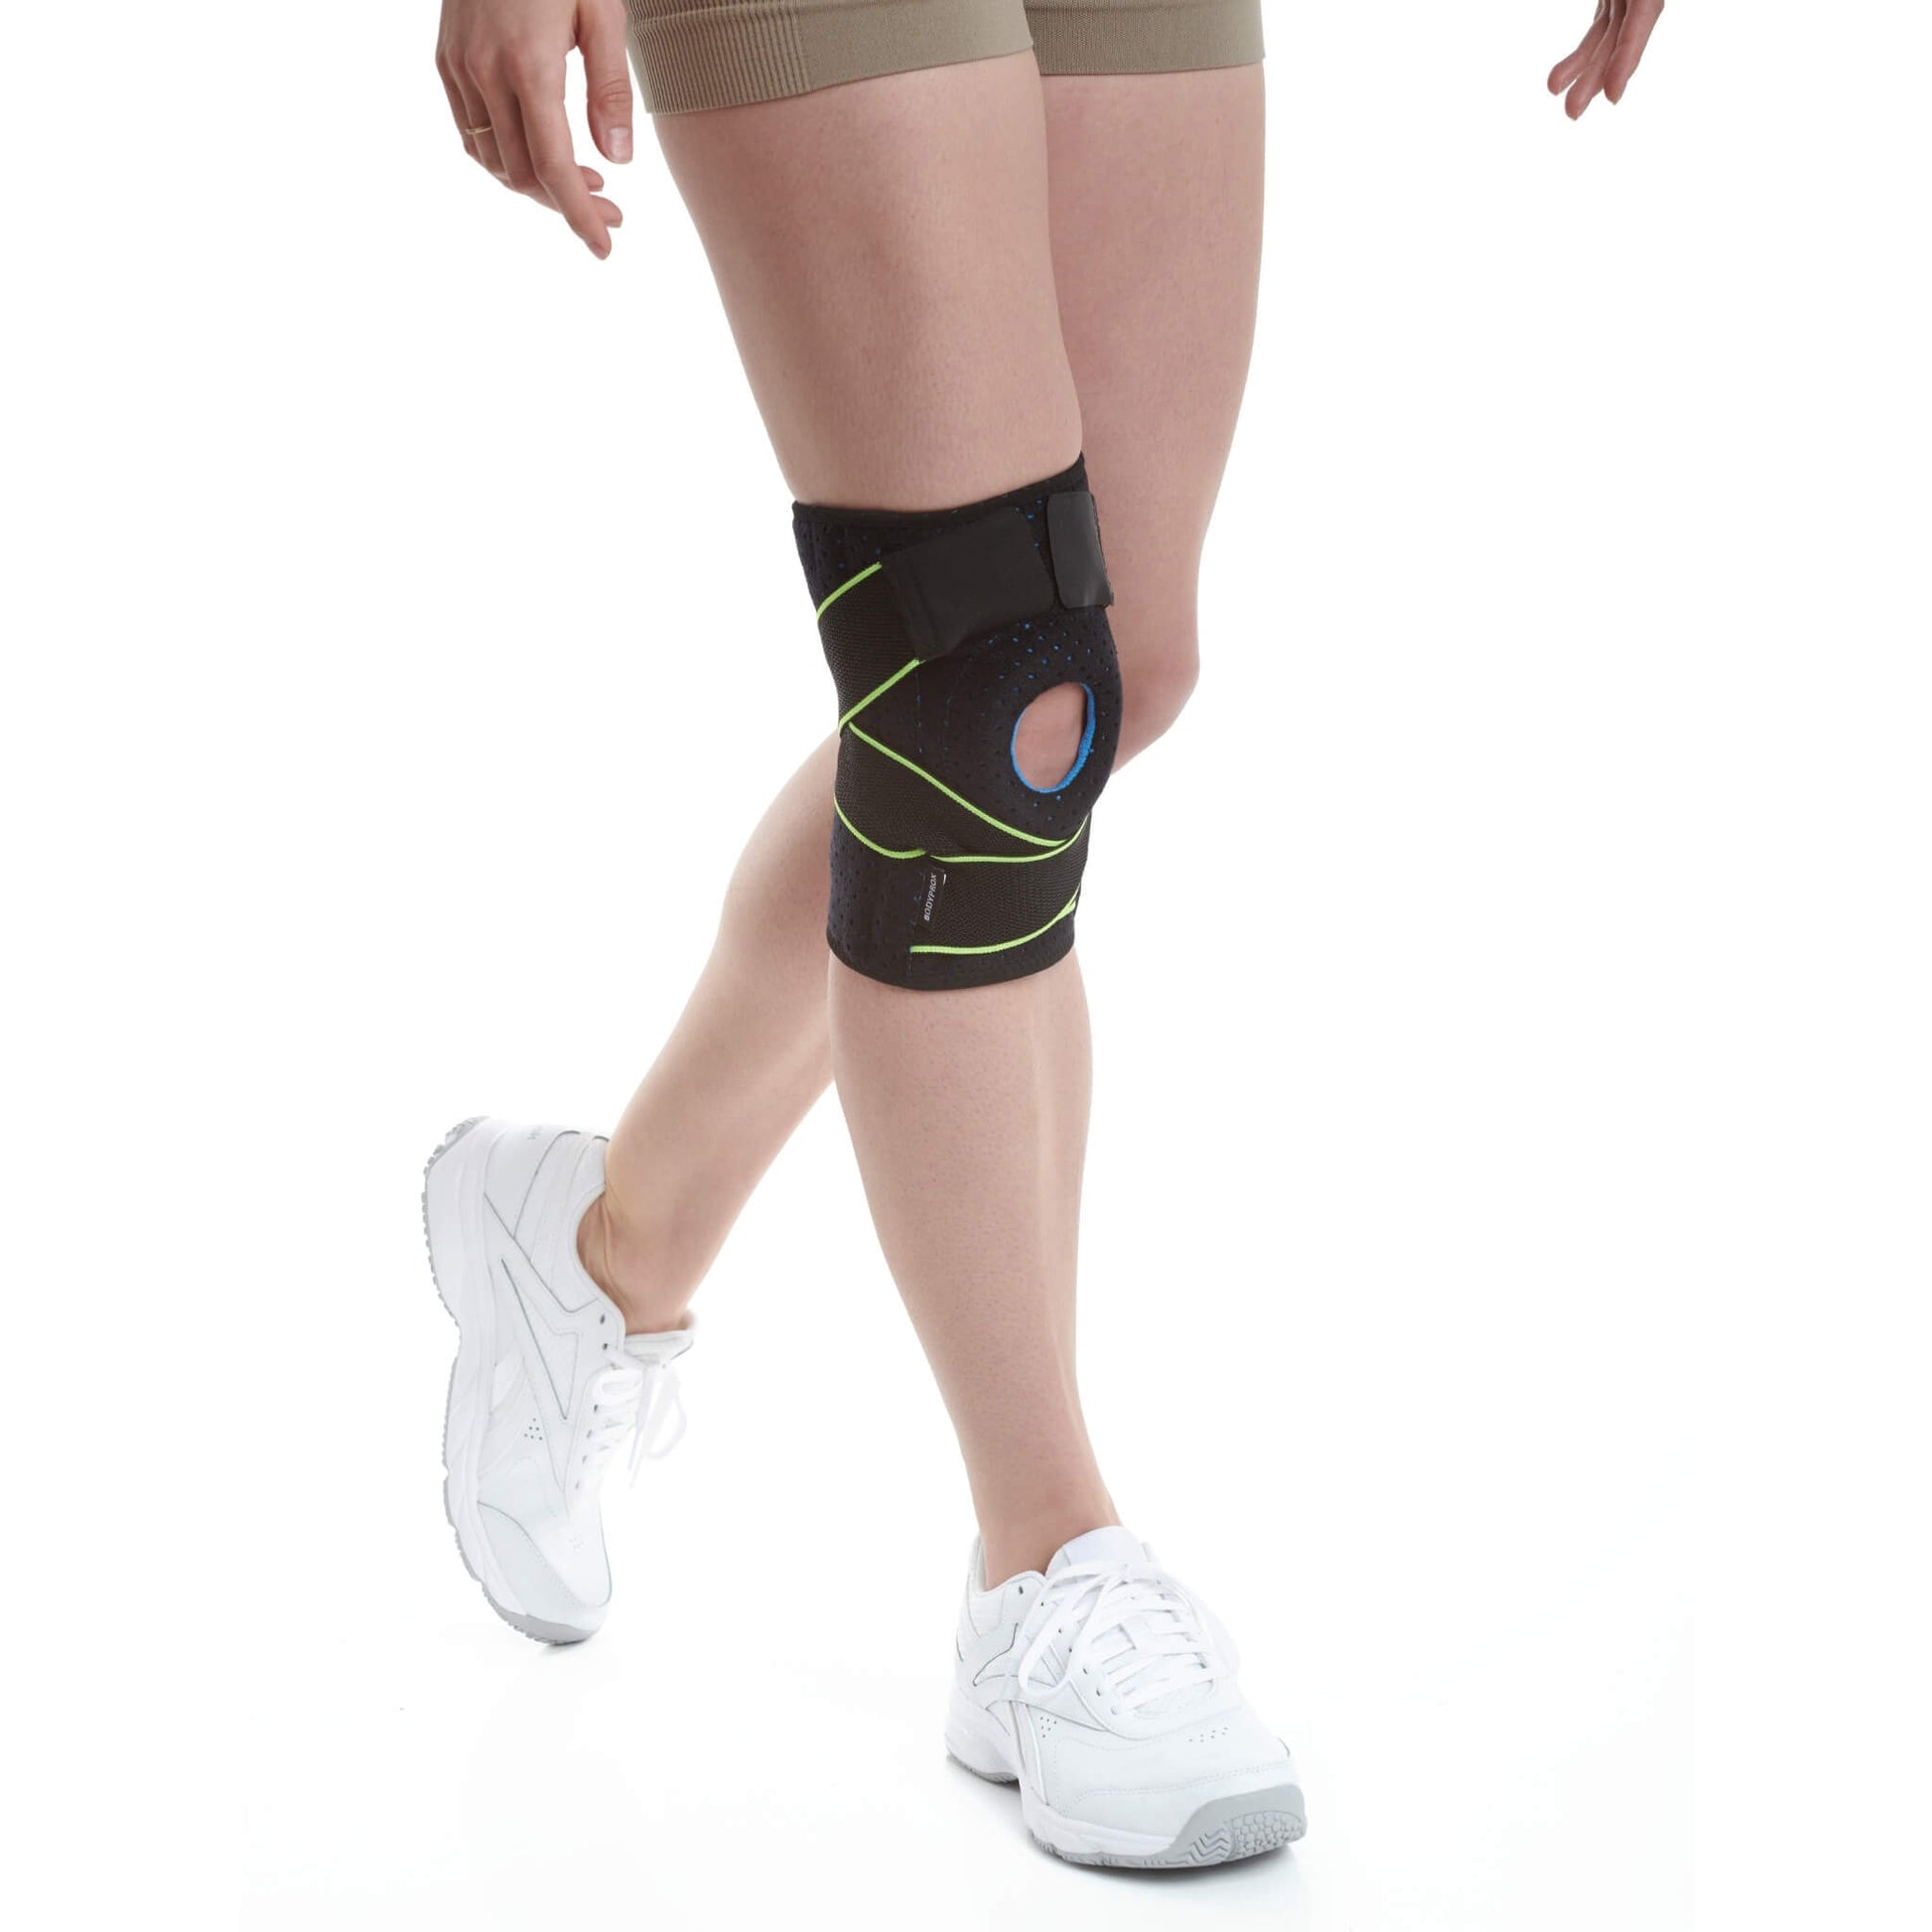 Bodyprox Knee Brace with Side Stabilizers & Patella Gel Pads for